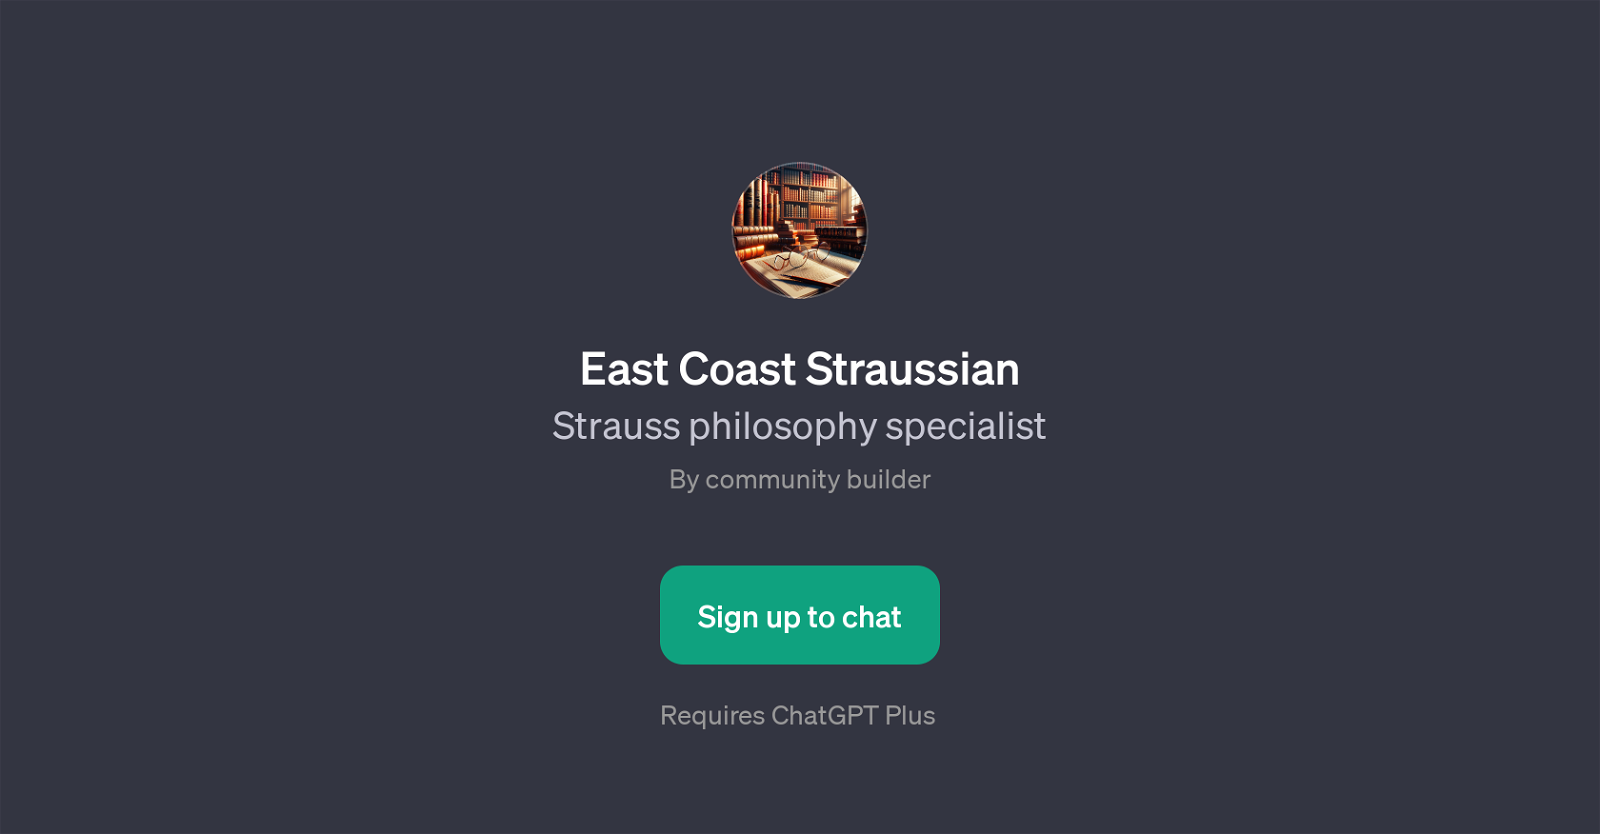 East Coast Straussian website